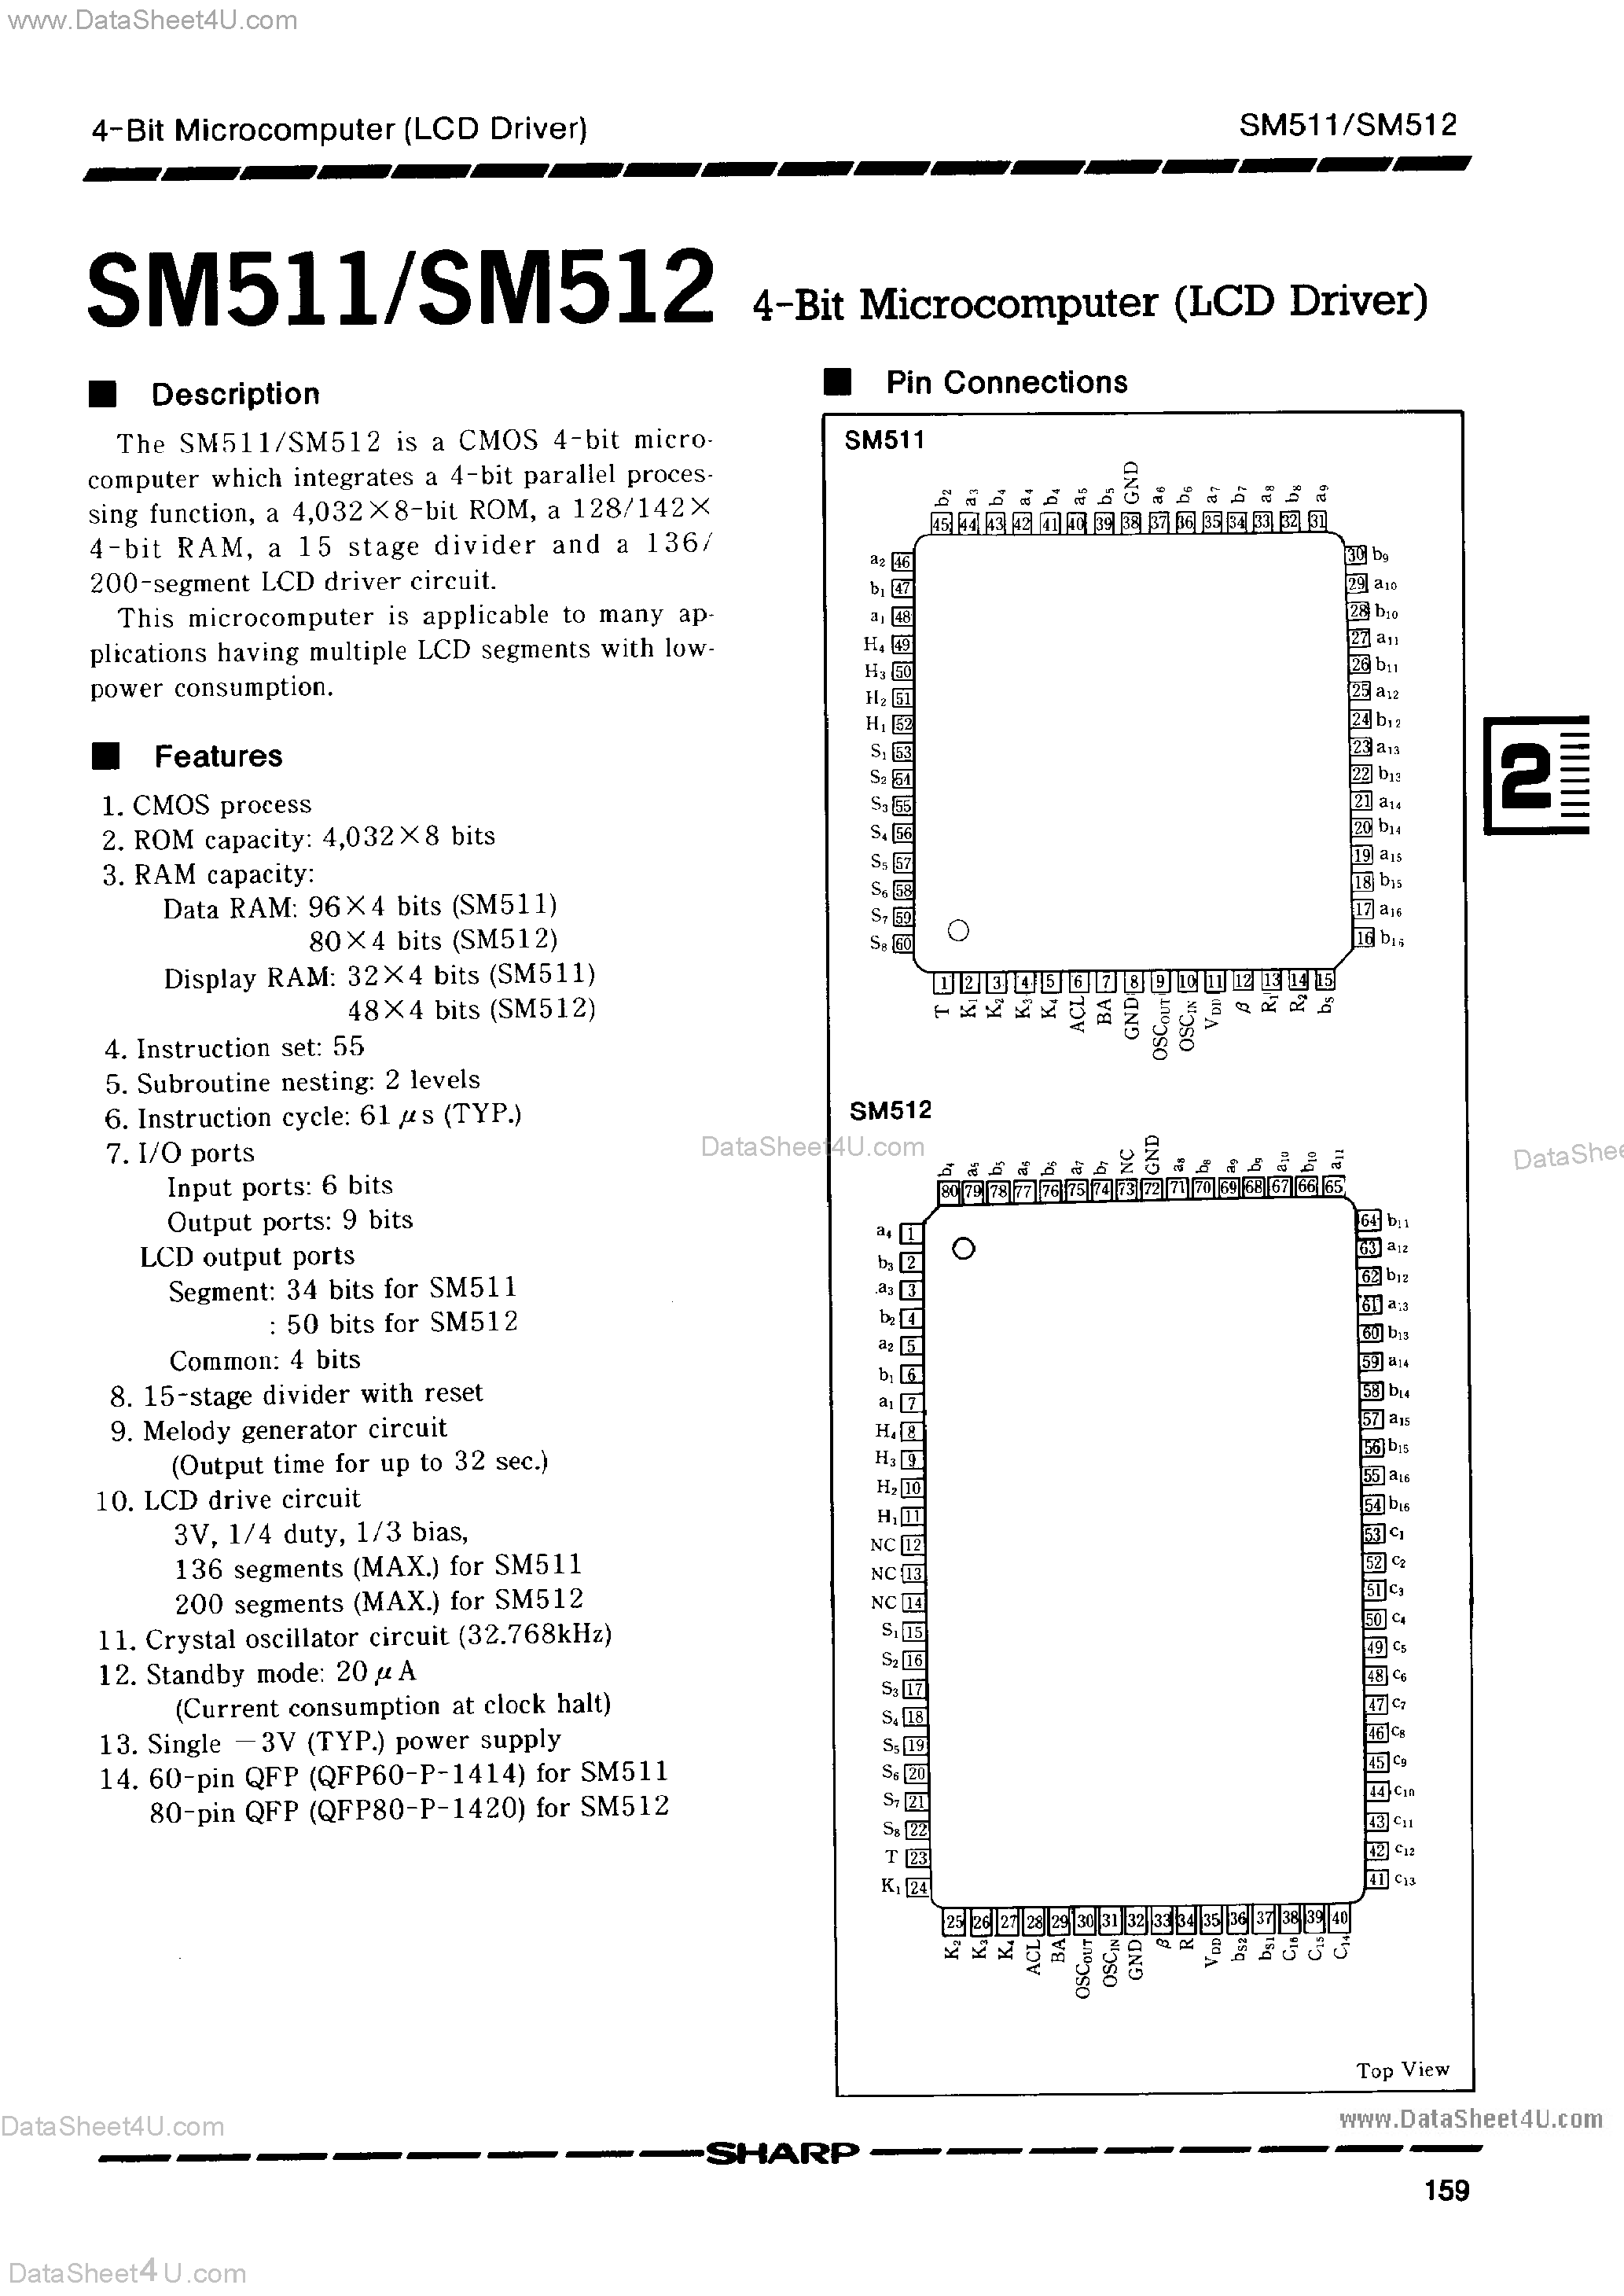 Даташит SM511 - (SM511 / SM512) 4-Bit Microcomputer страница 1